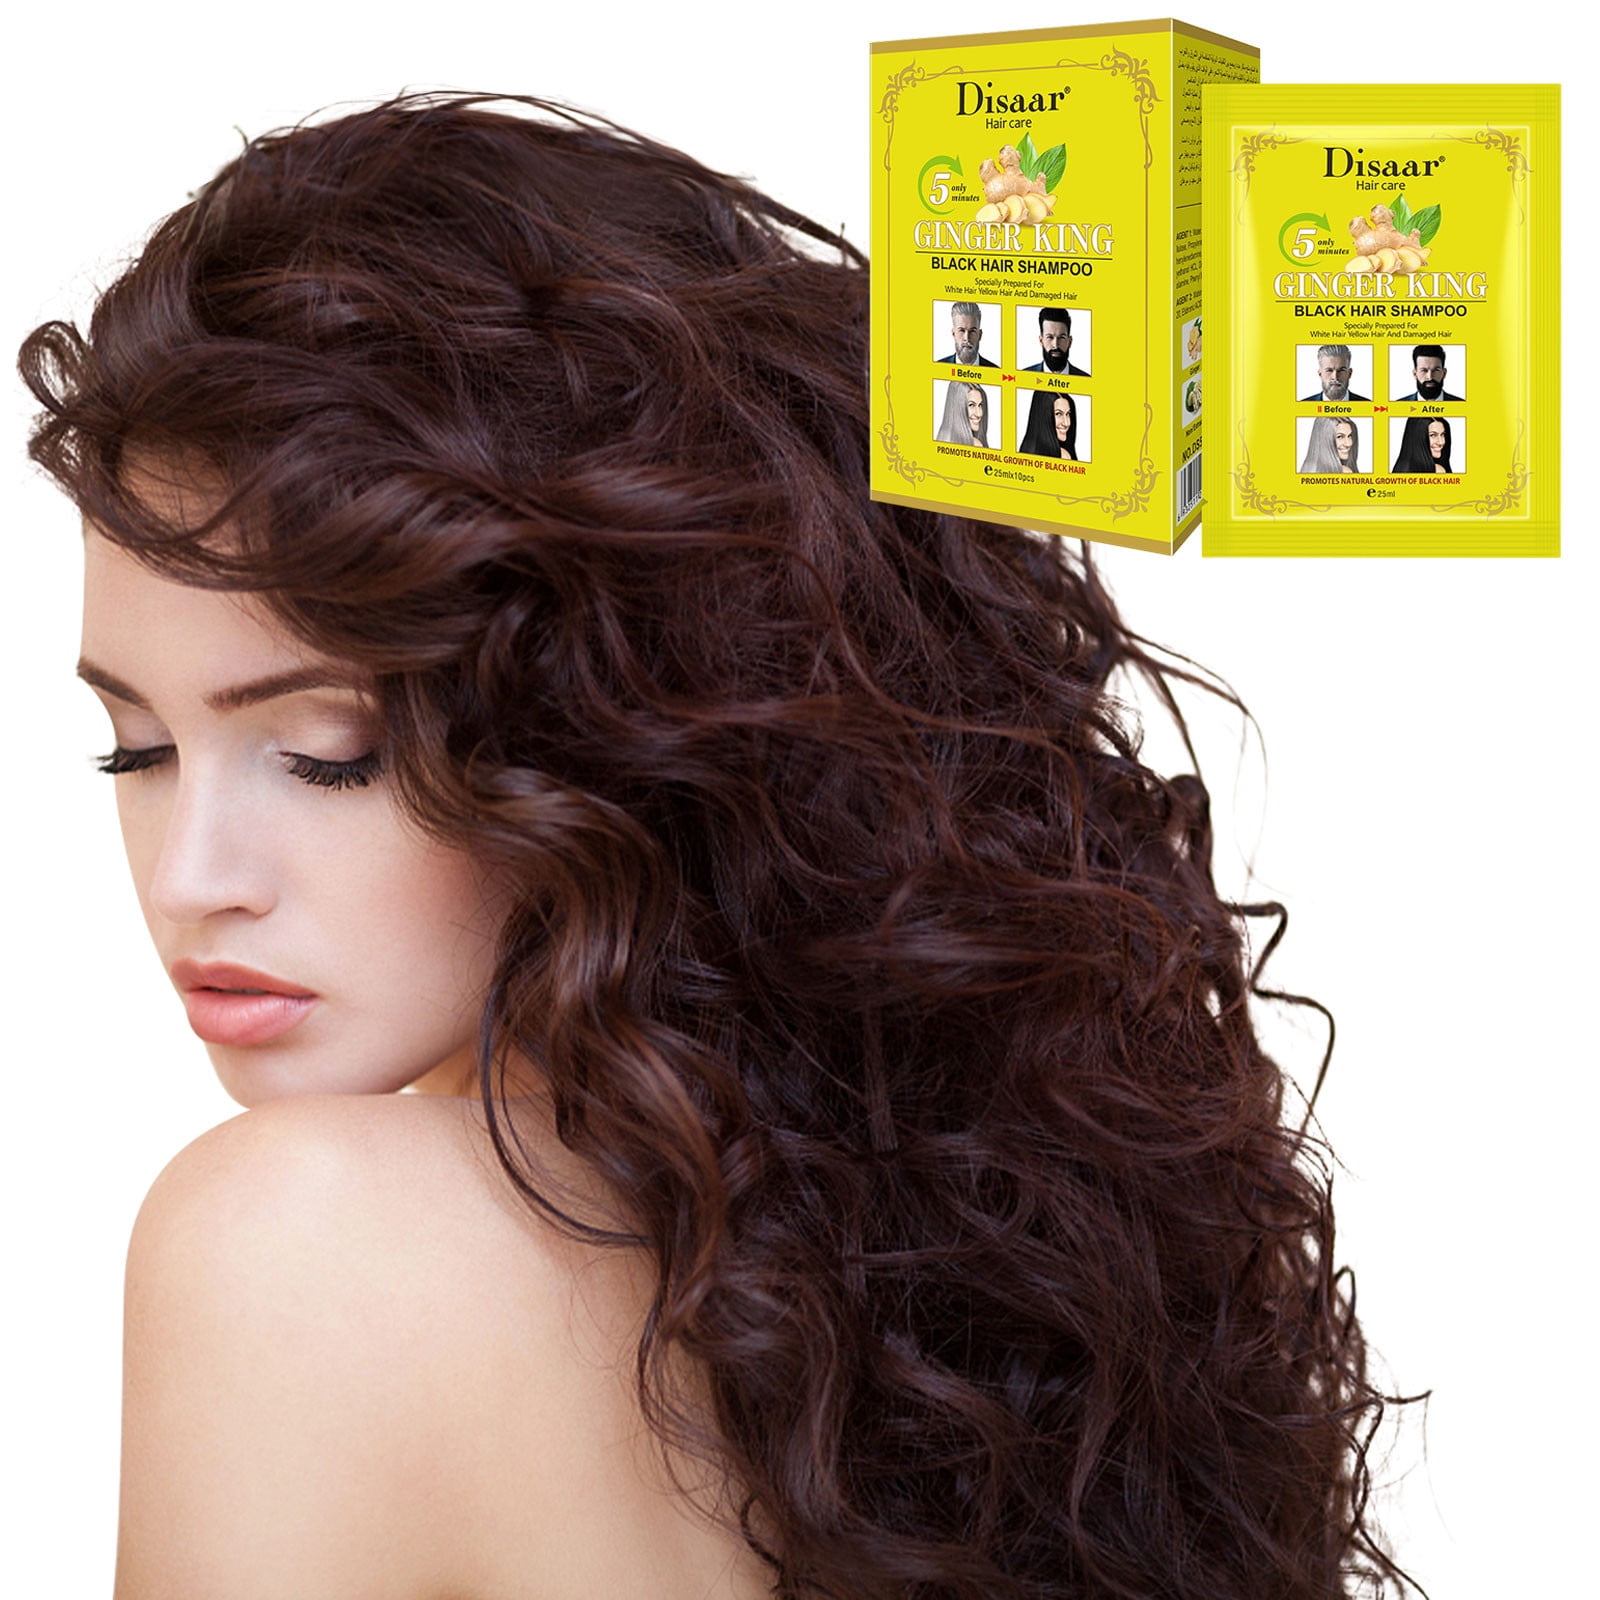 Ginger Bag Shampoo Hairdressing Color Change Hair White To Black 250ml -  